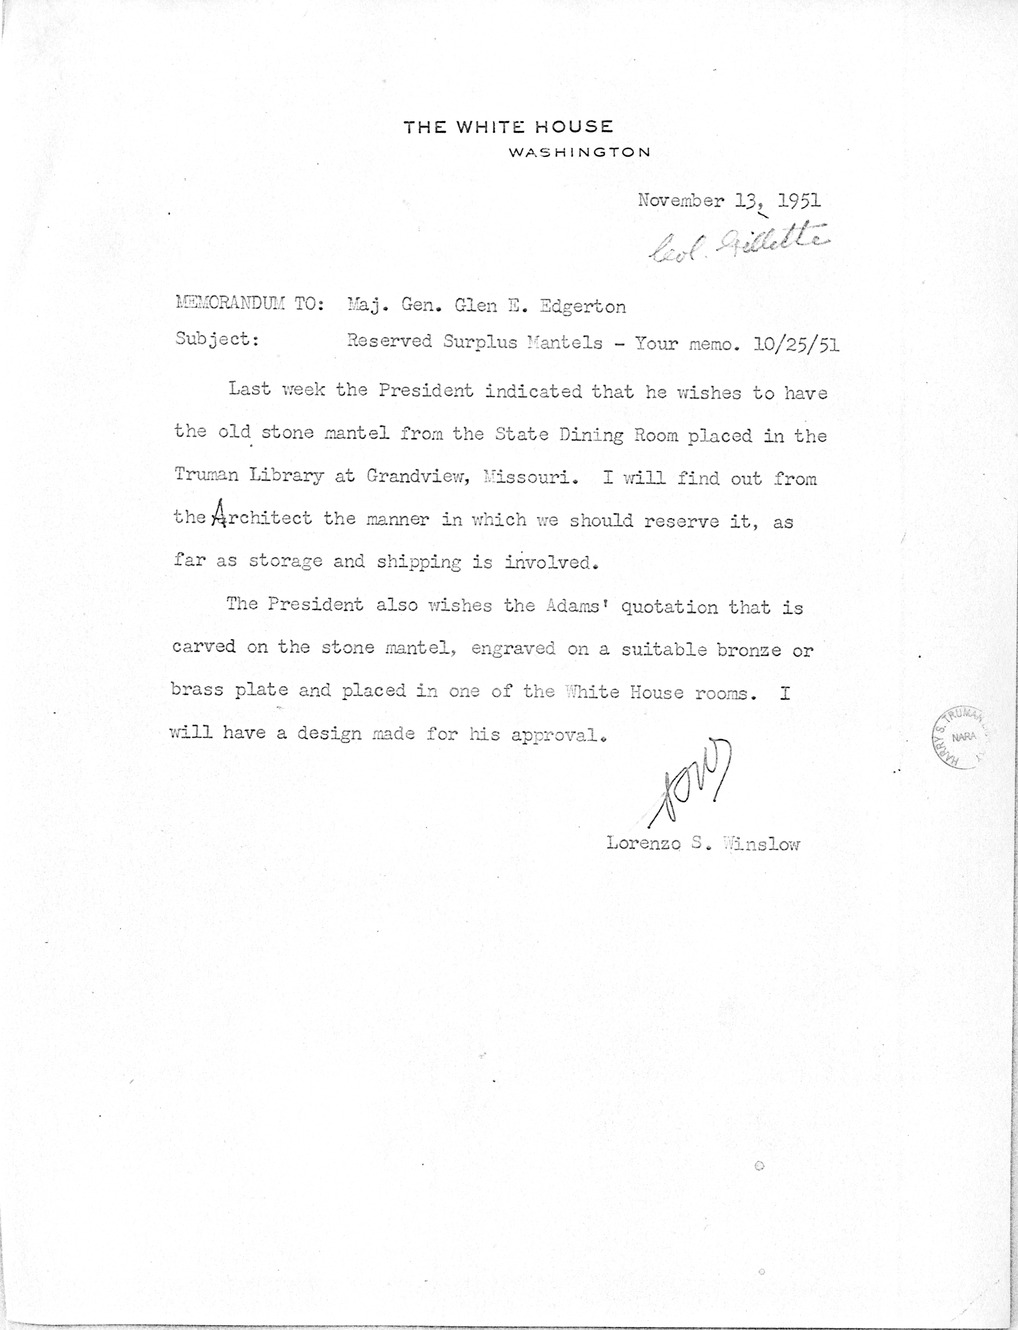 Memorandum from Lorenzo S. Winslow to Major General Glen E. Edgerton